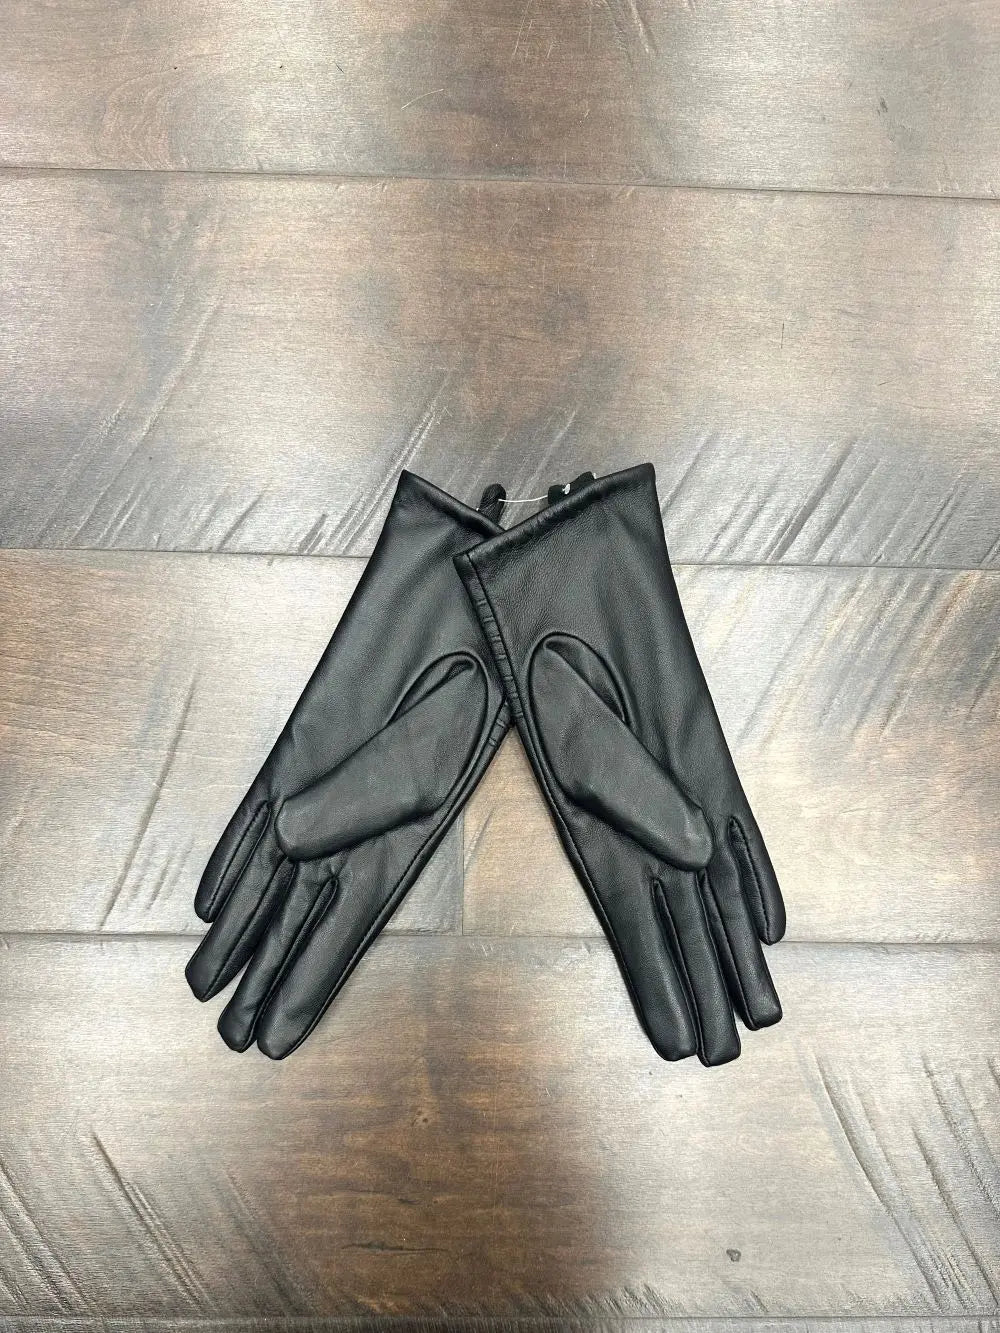 LaBelle Since 1919 Black Gloves w/ Lines Across Top